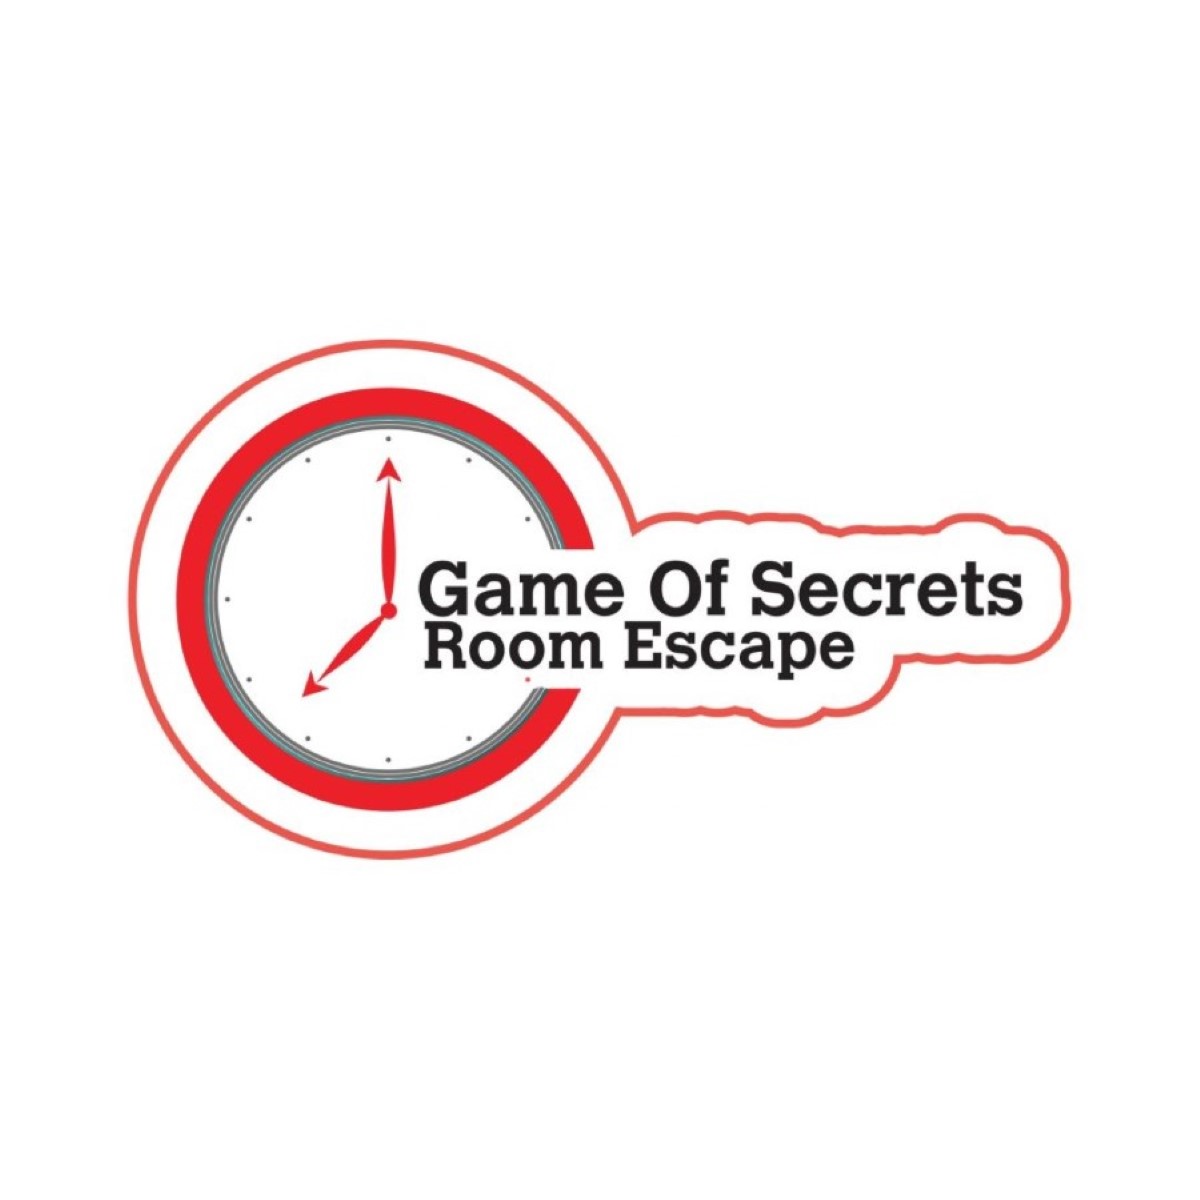 GameOfSecrets Room Escape Tenerife